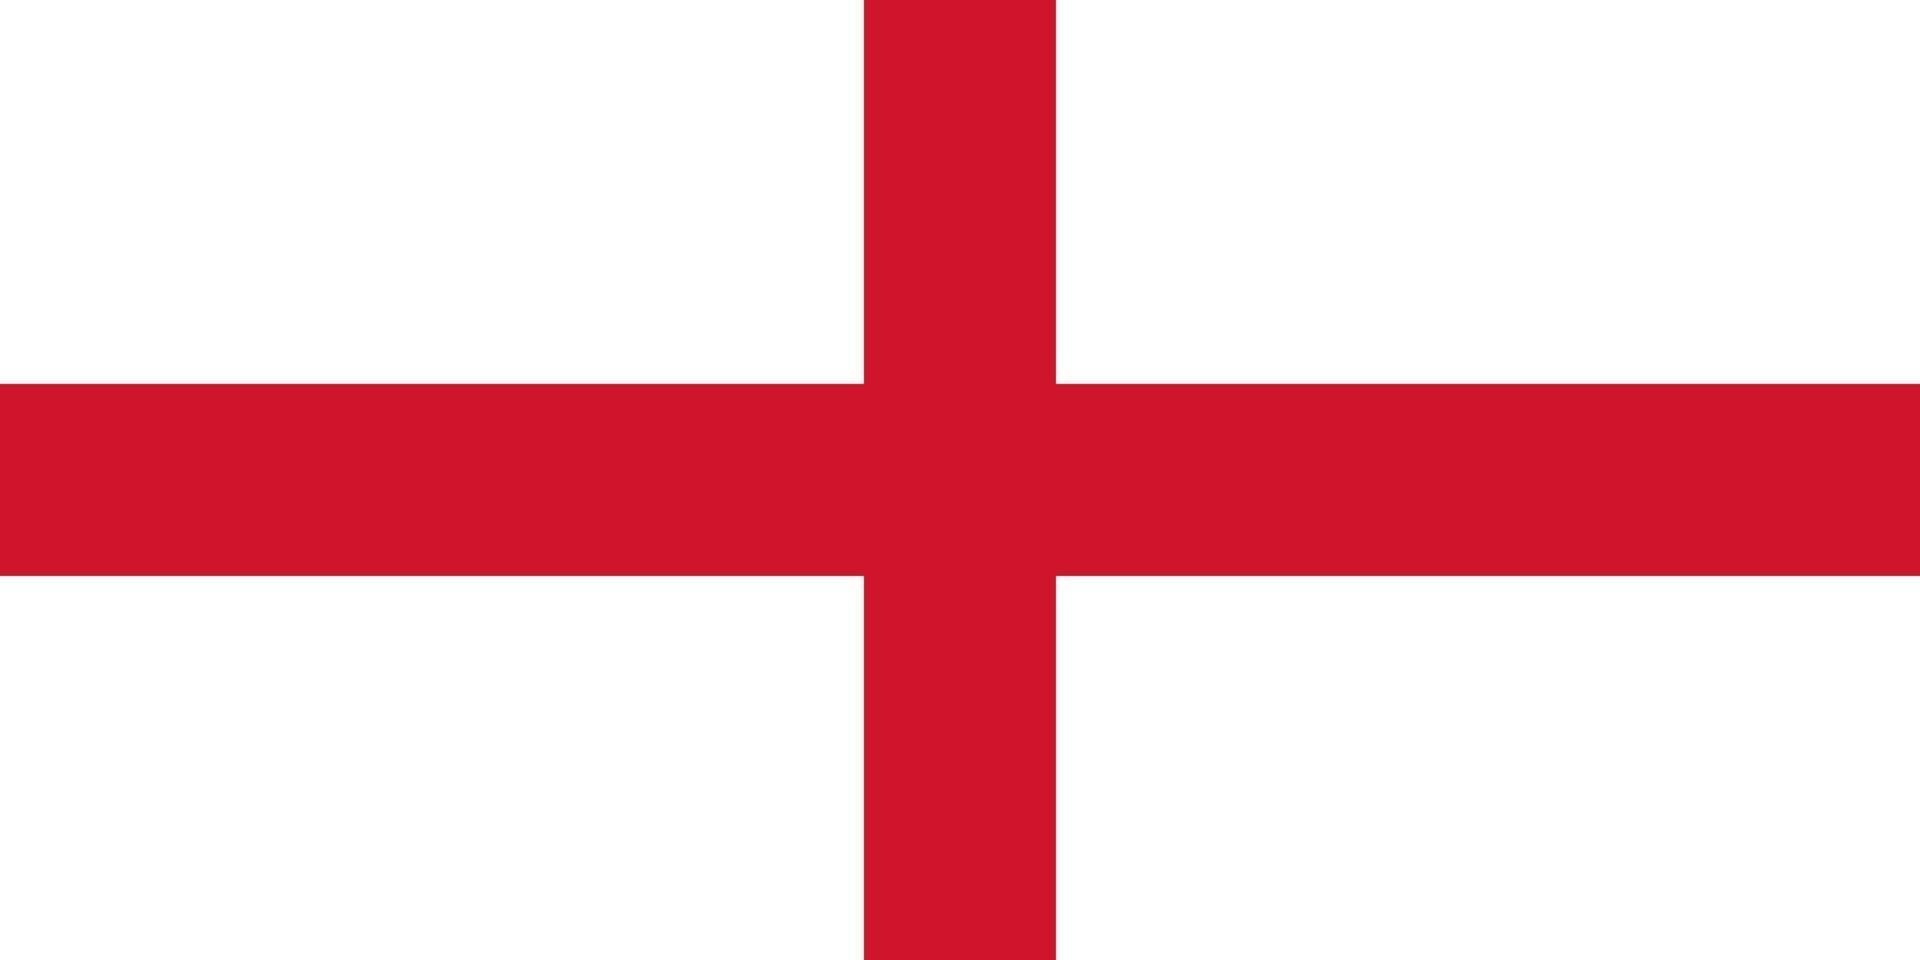 bandiera inglese dell'inghilterra 3084225 Arte vettoriale a Vecteezy